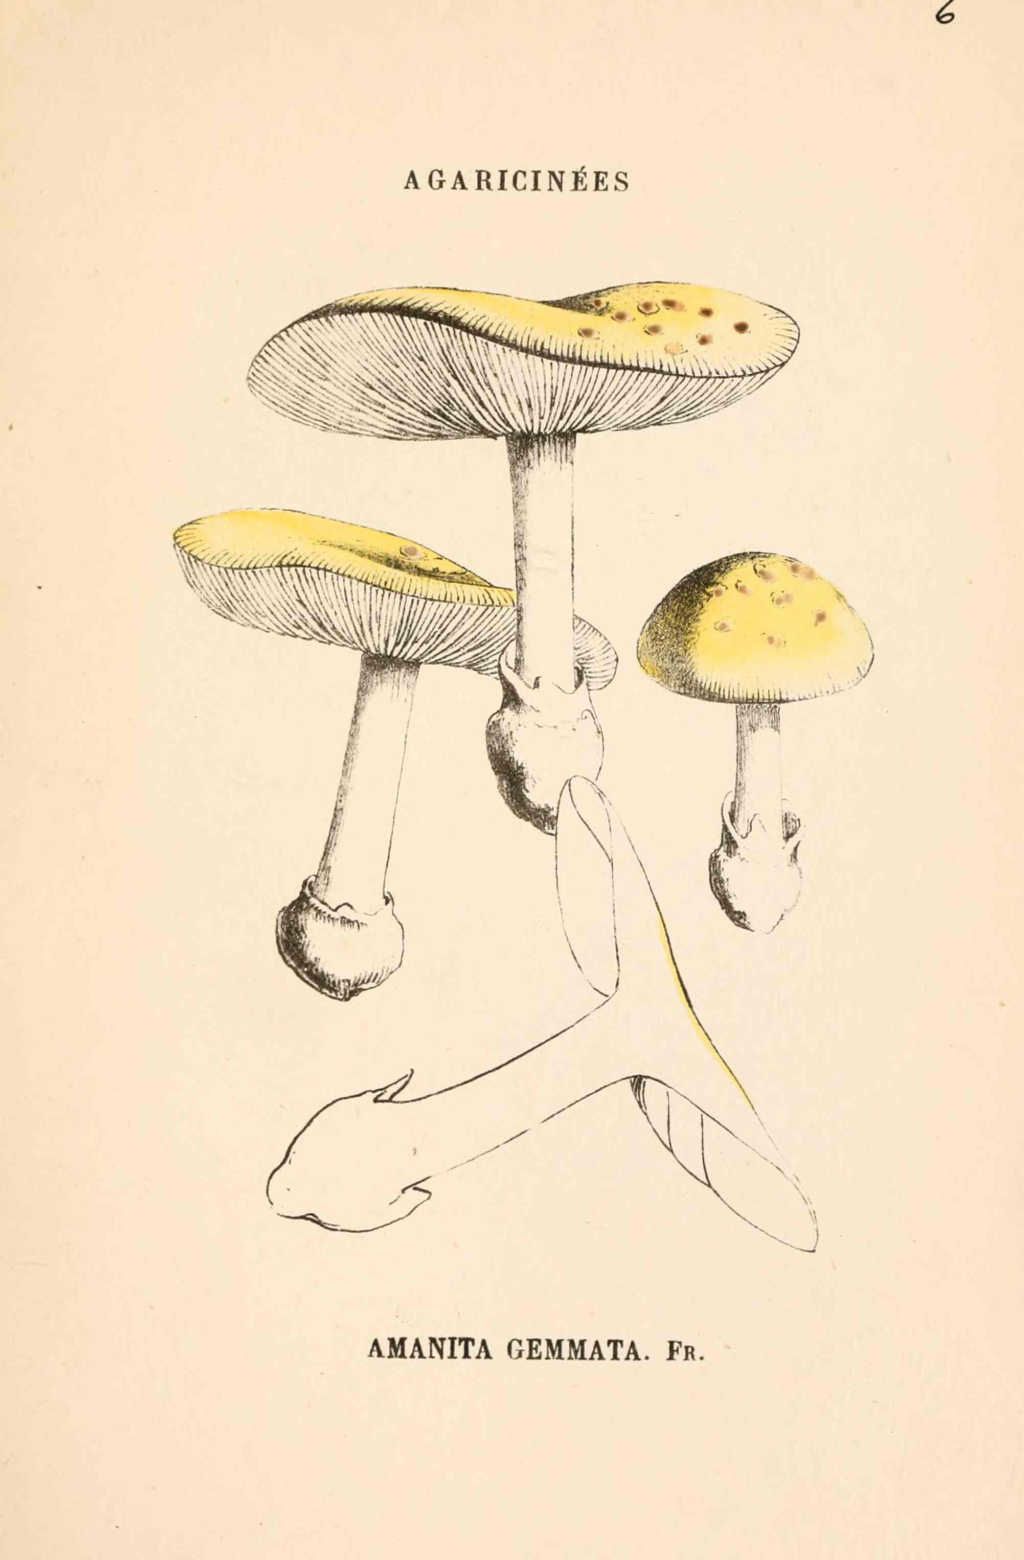 amanita gemmata - dessin-gravure couleur de champignon